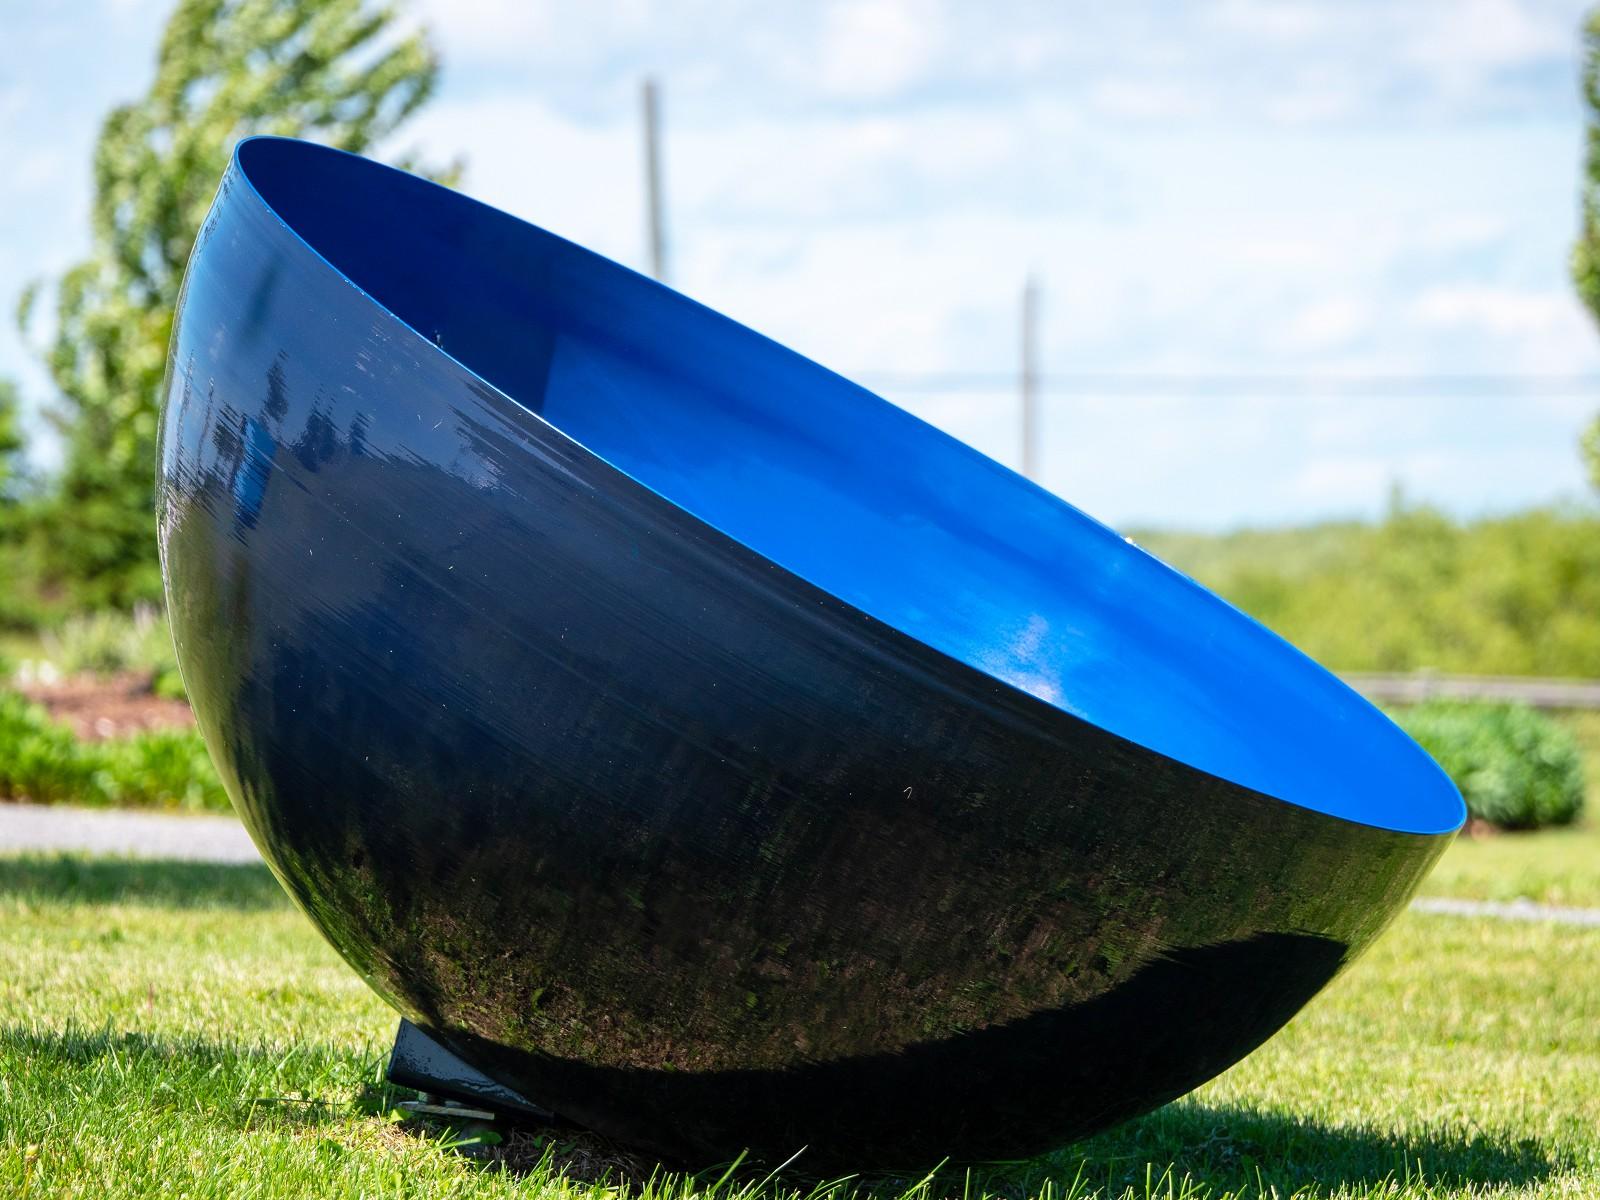 Singing Bowl Ultramarine Sky Medium - painted stainless steel garden sculpture - Contemporary Sculpture by Marlene Hilton Moore